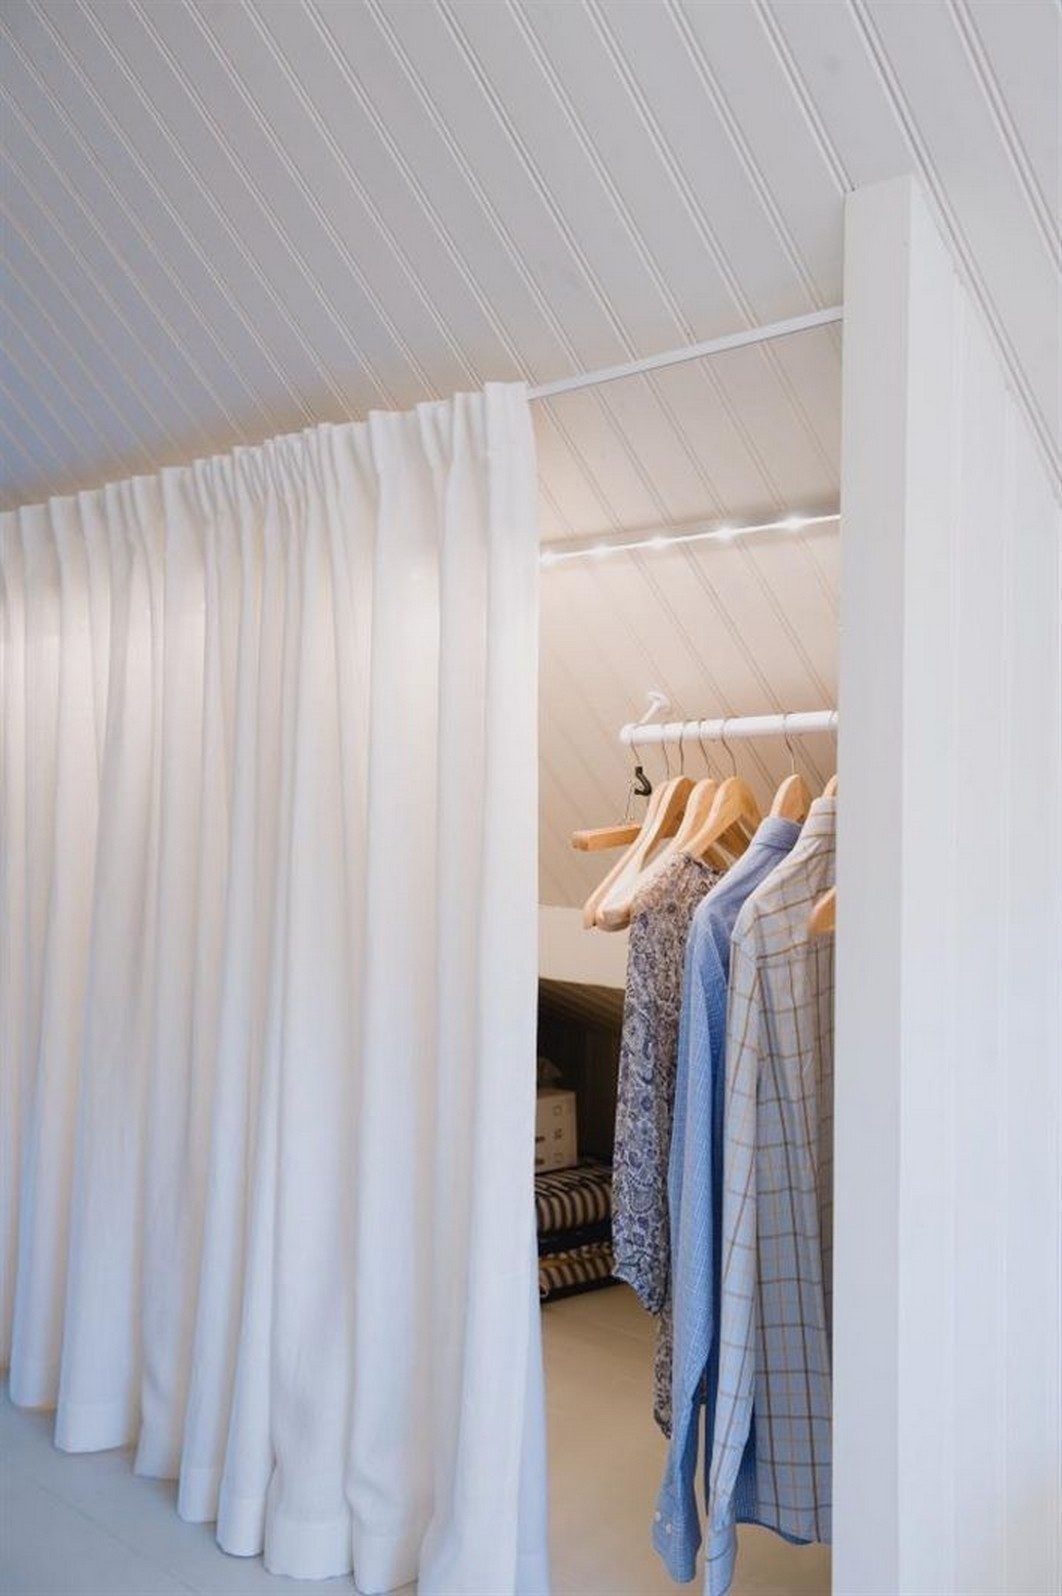 Hanging clothes wardrobe